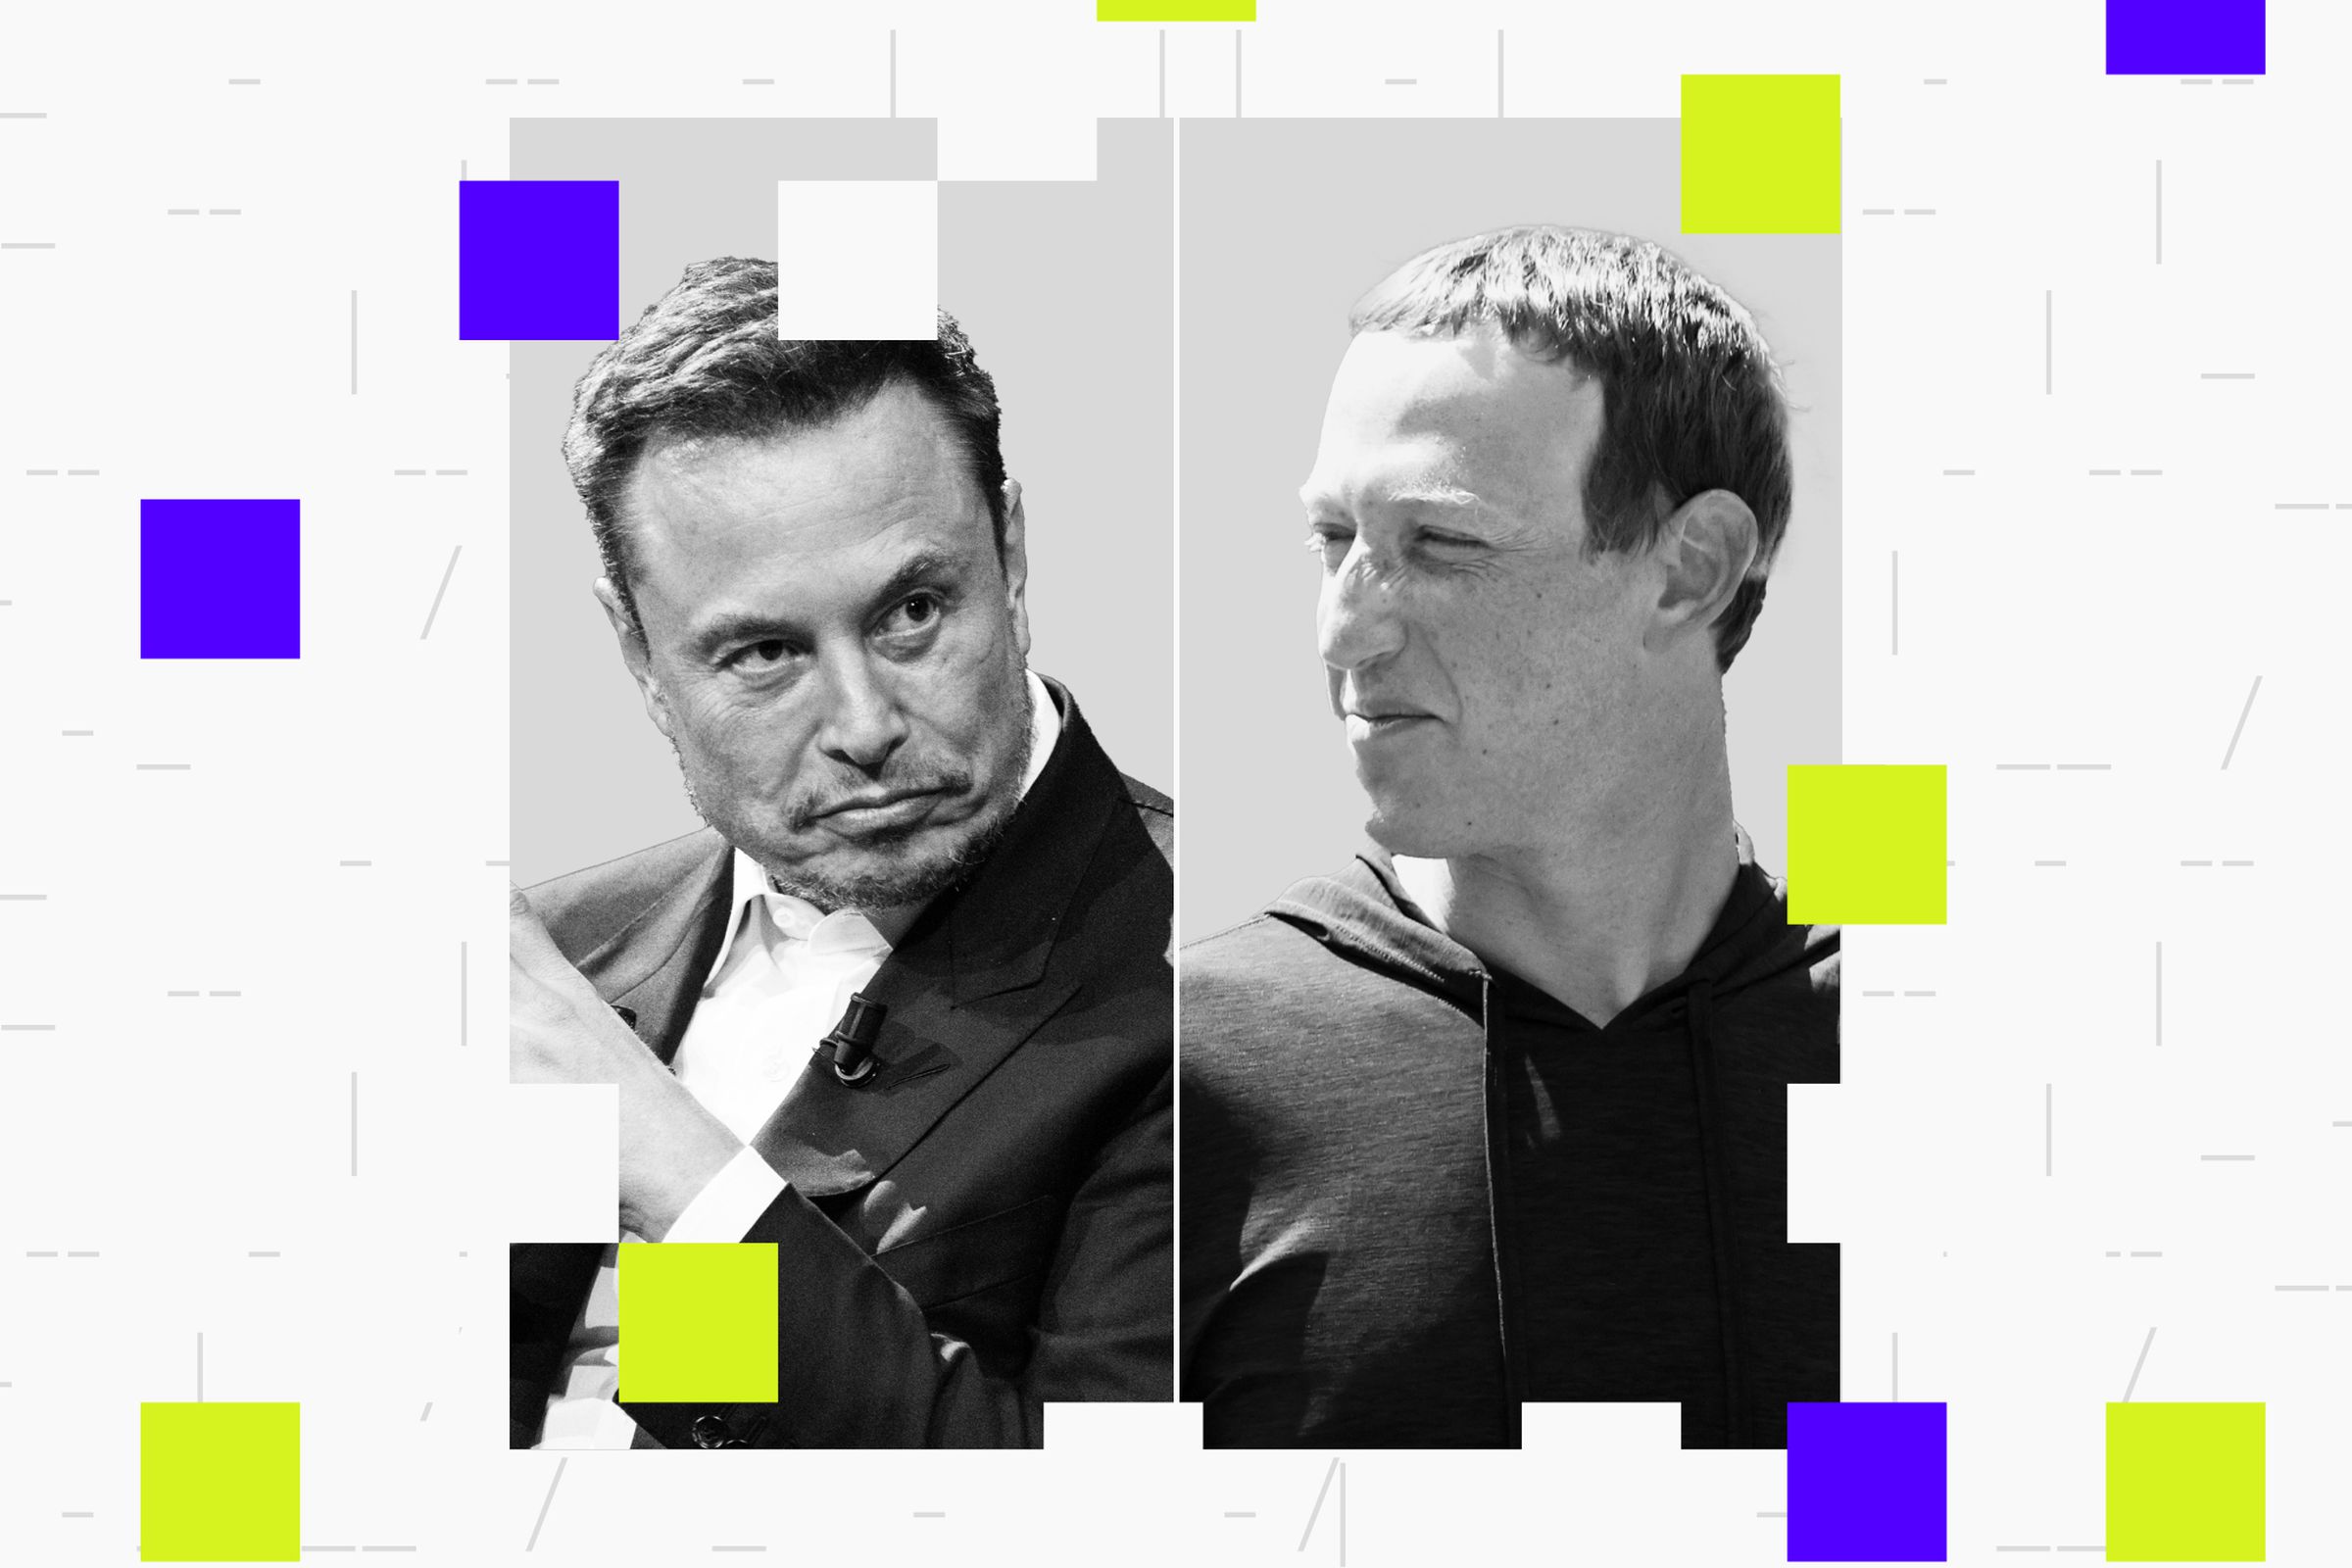 Photos of Elon Musk and Mark Zuckerberg.